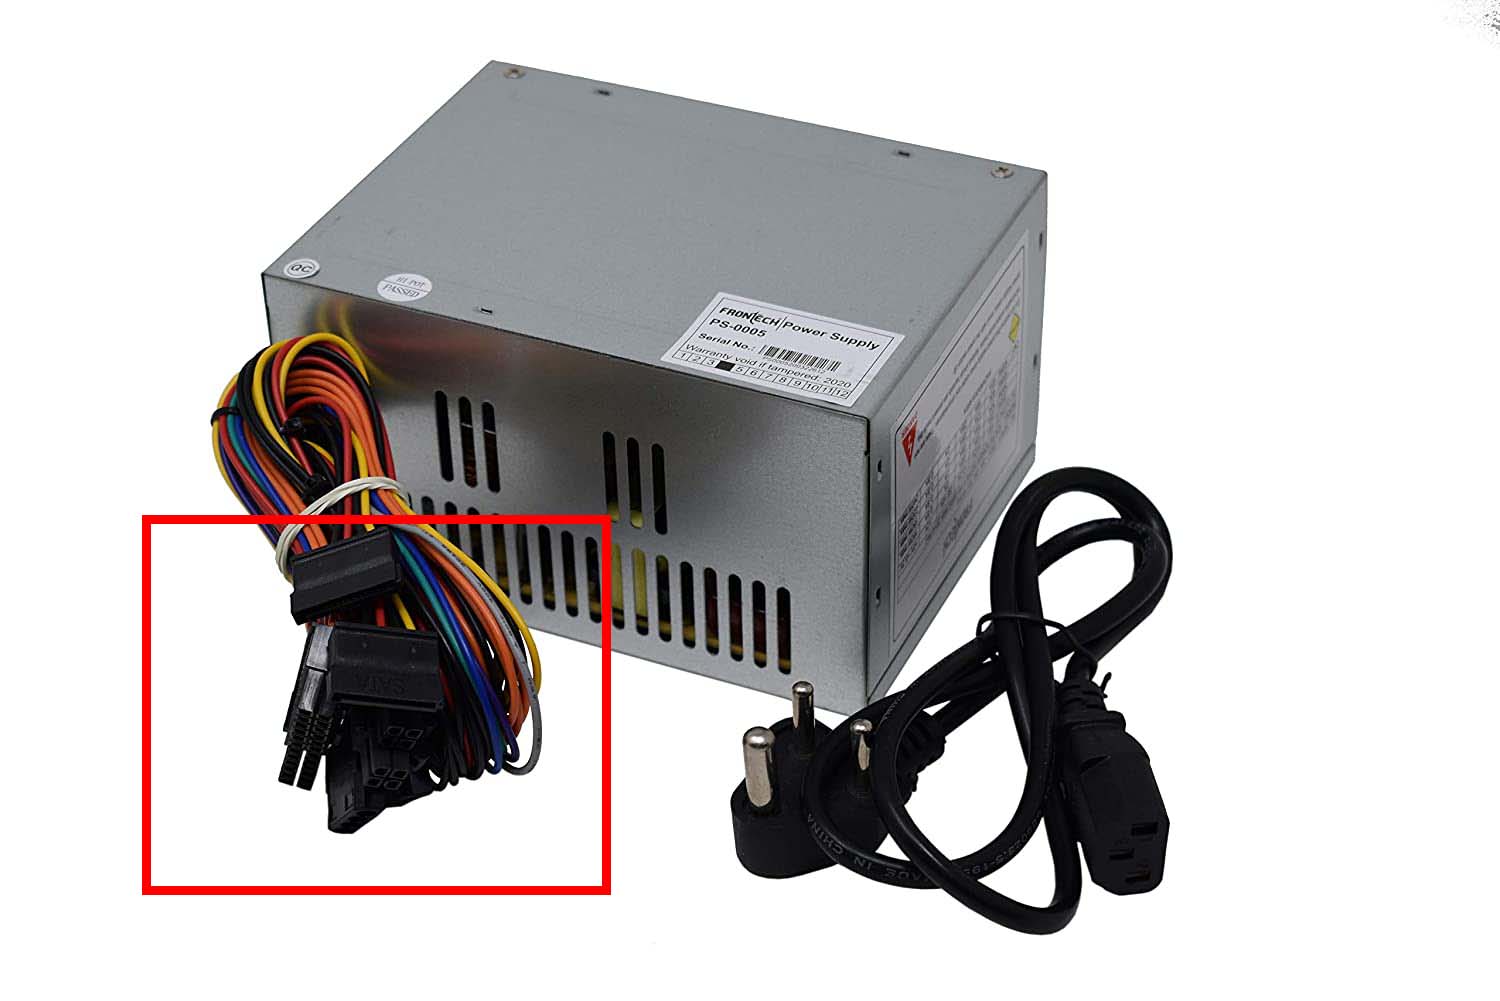 SATA power connectors on a PSU (Photo: Courtesy of Amazon)